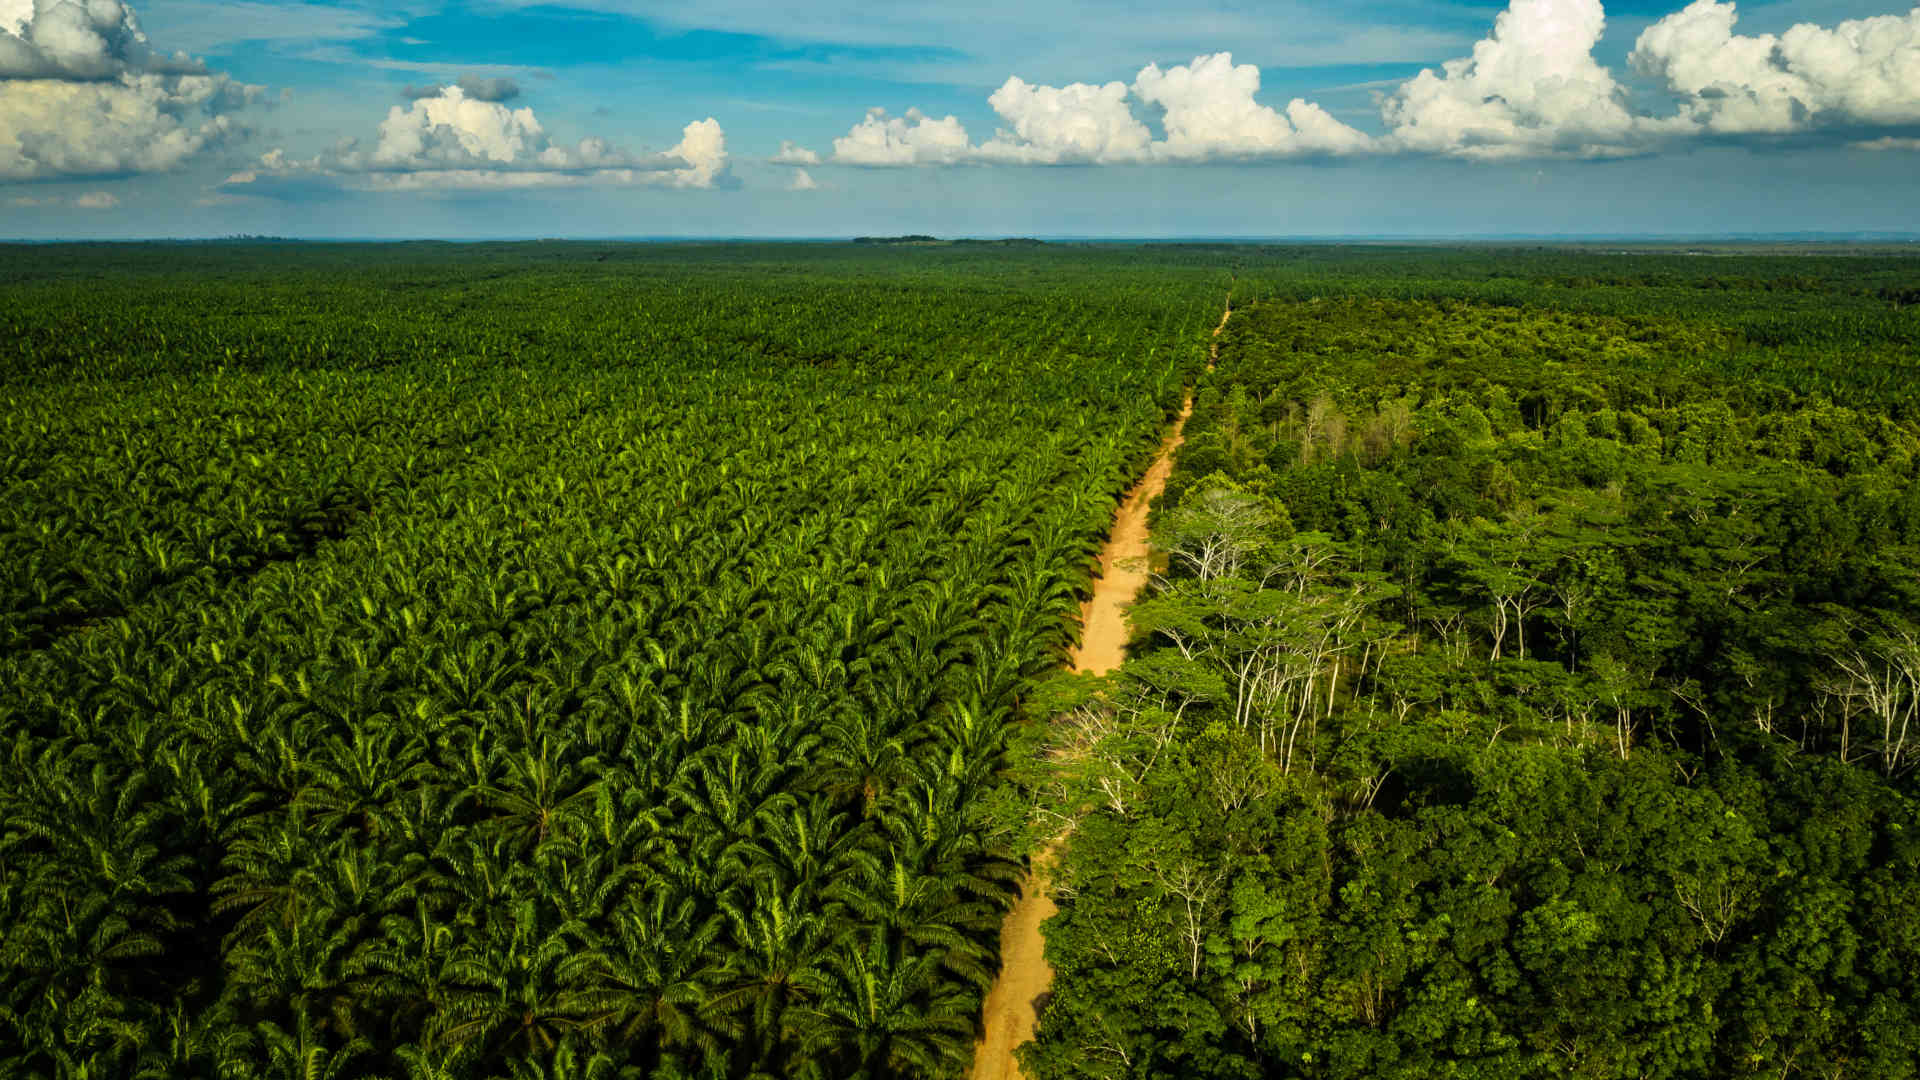 An oil palm plantation in Muara Kaman Ilir village, East Kalimantan, Indonesia.